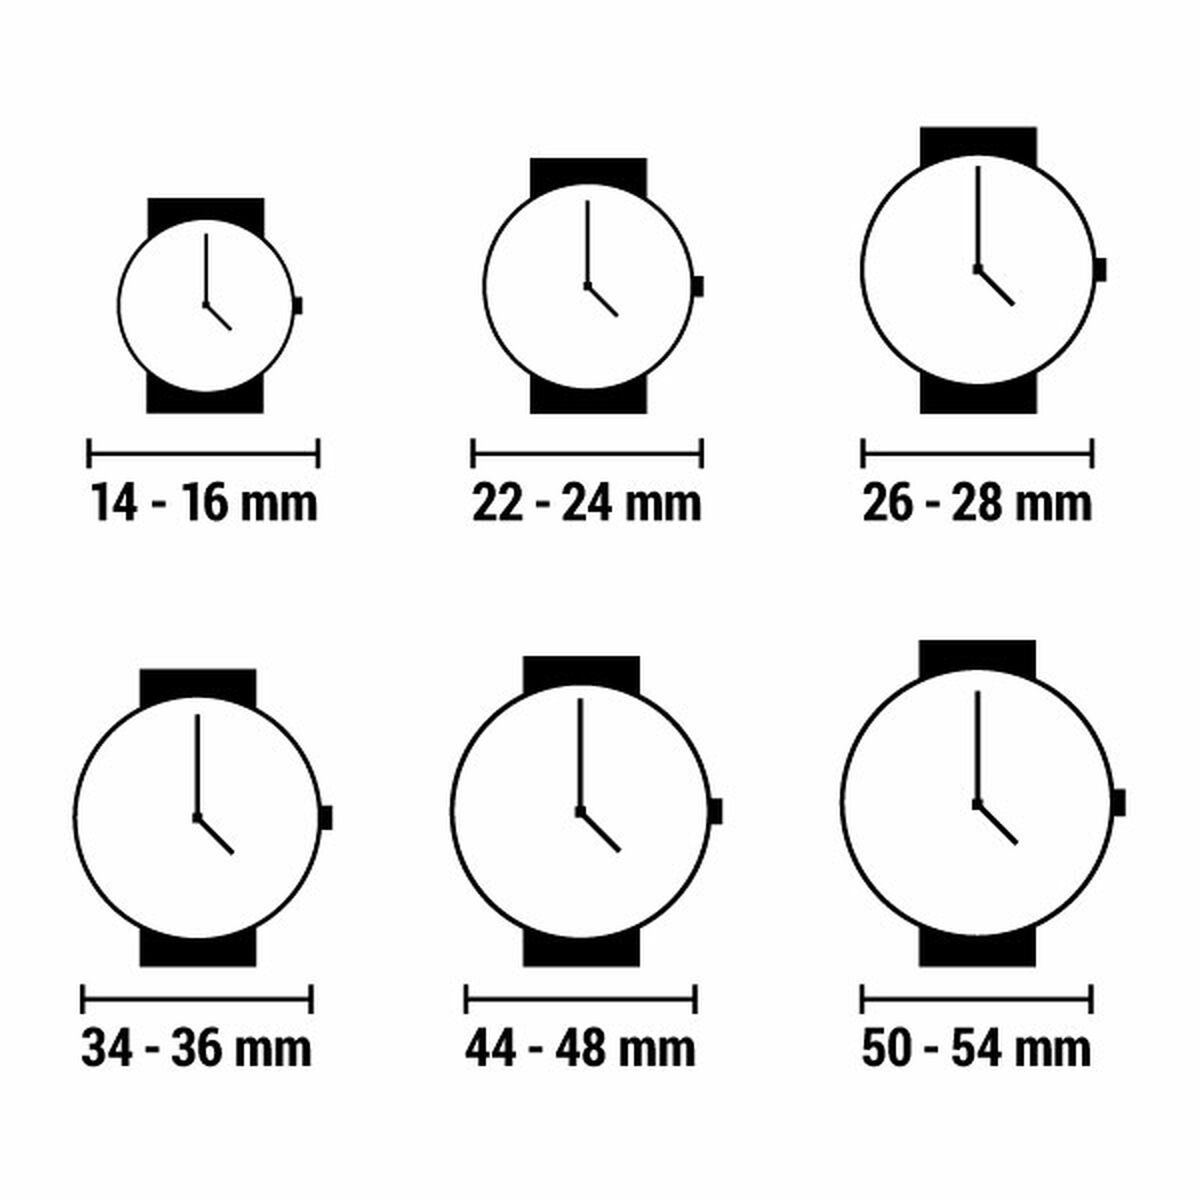 Horloge Dames Olivia Burton OB16SH02 (Ø 40 mm)